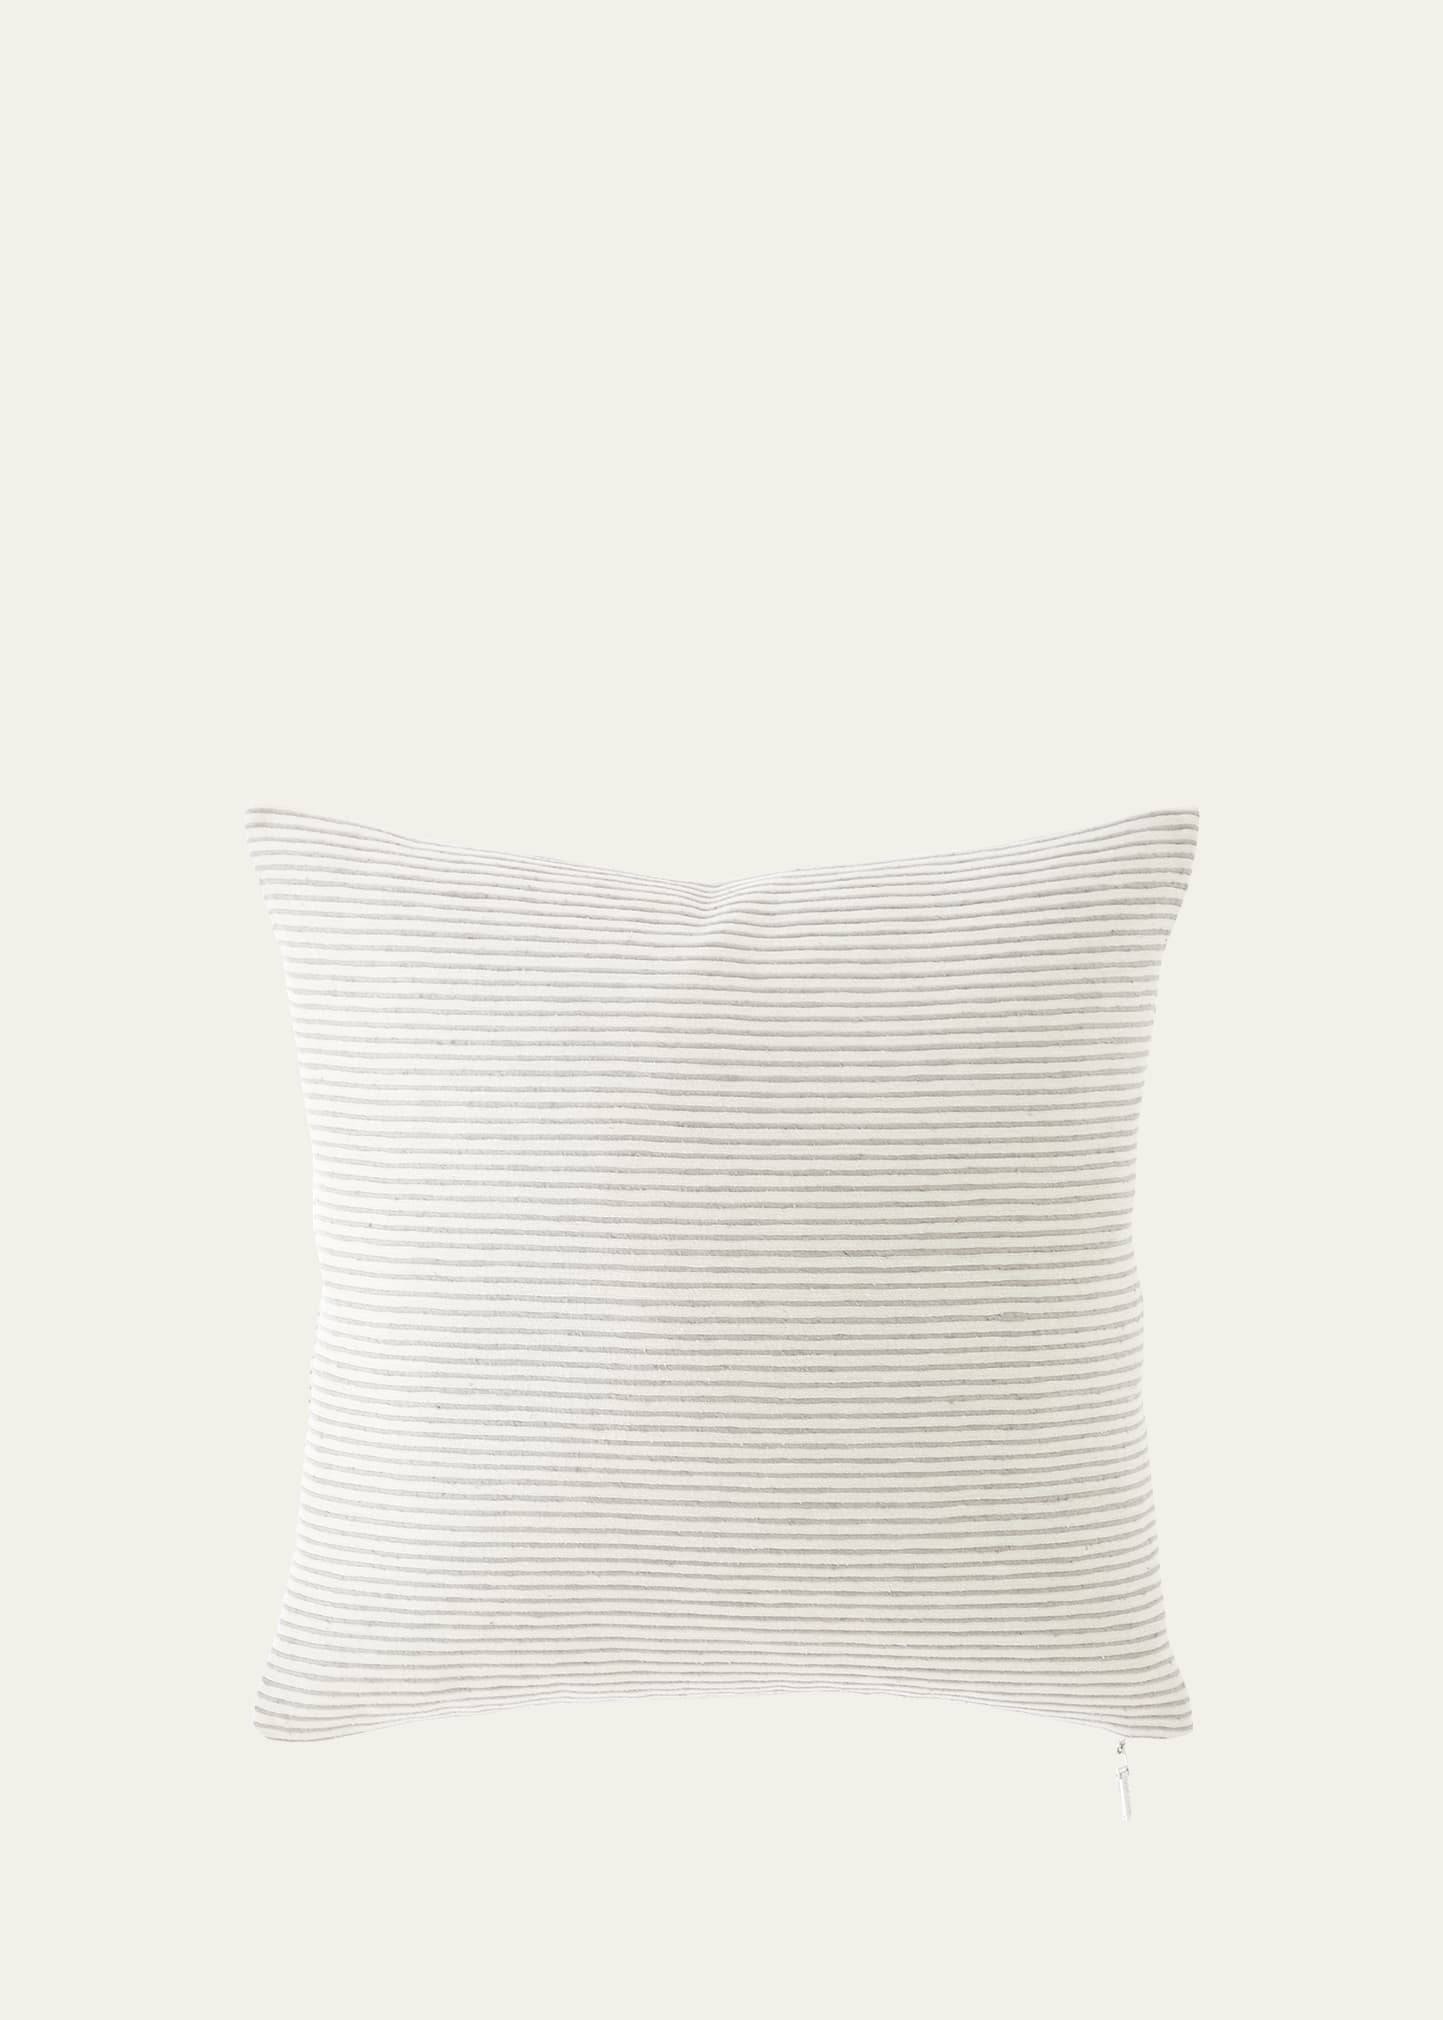 Ralph Lauren Camila Stripe Decorative Pillow, 18"sq. In White